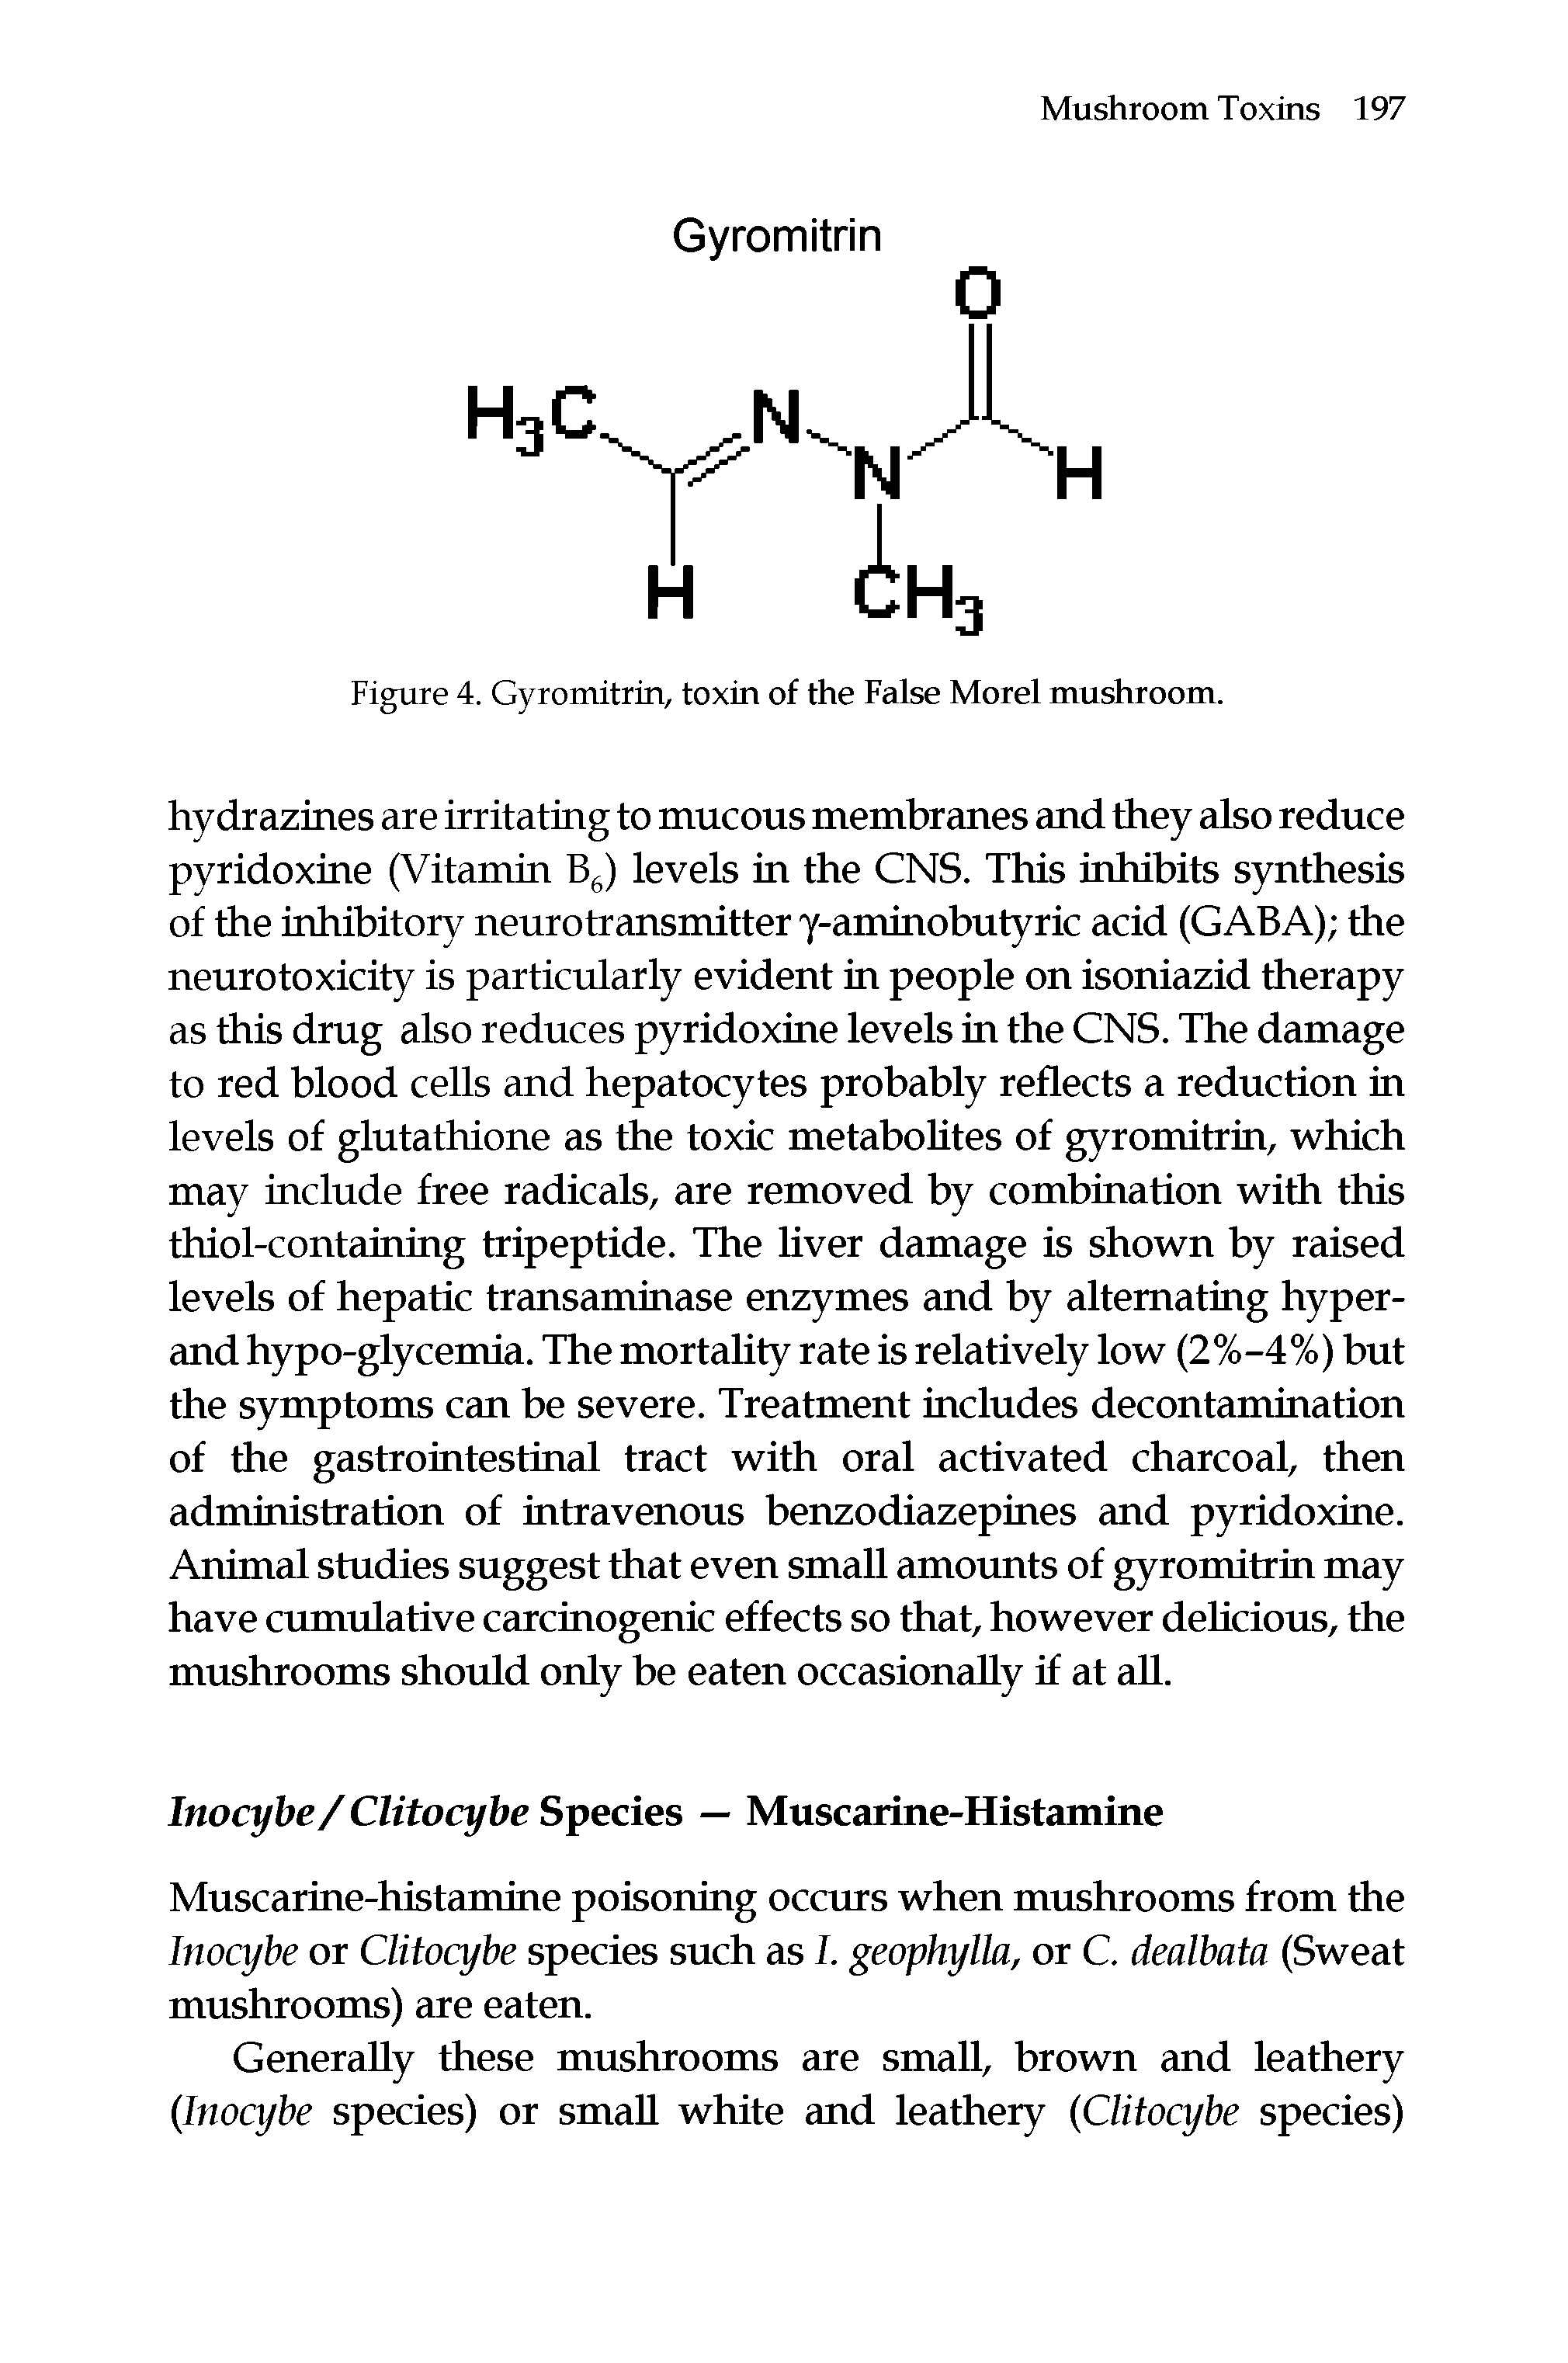 Figure 4. Gyromitrin, toxin of the False Morel mushroom.